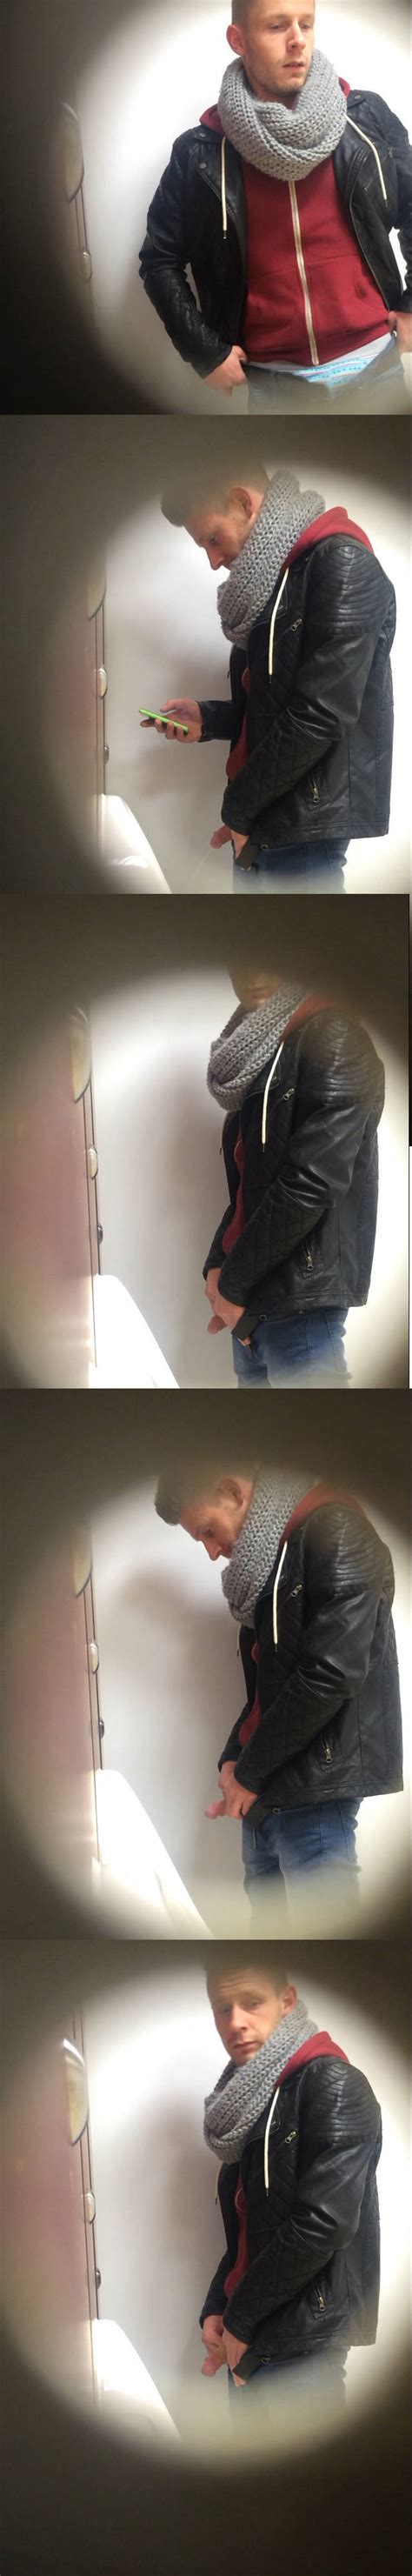 Hidden Cam Guy Caught Peeing Public Urinal Spycamfromguys Hidden